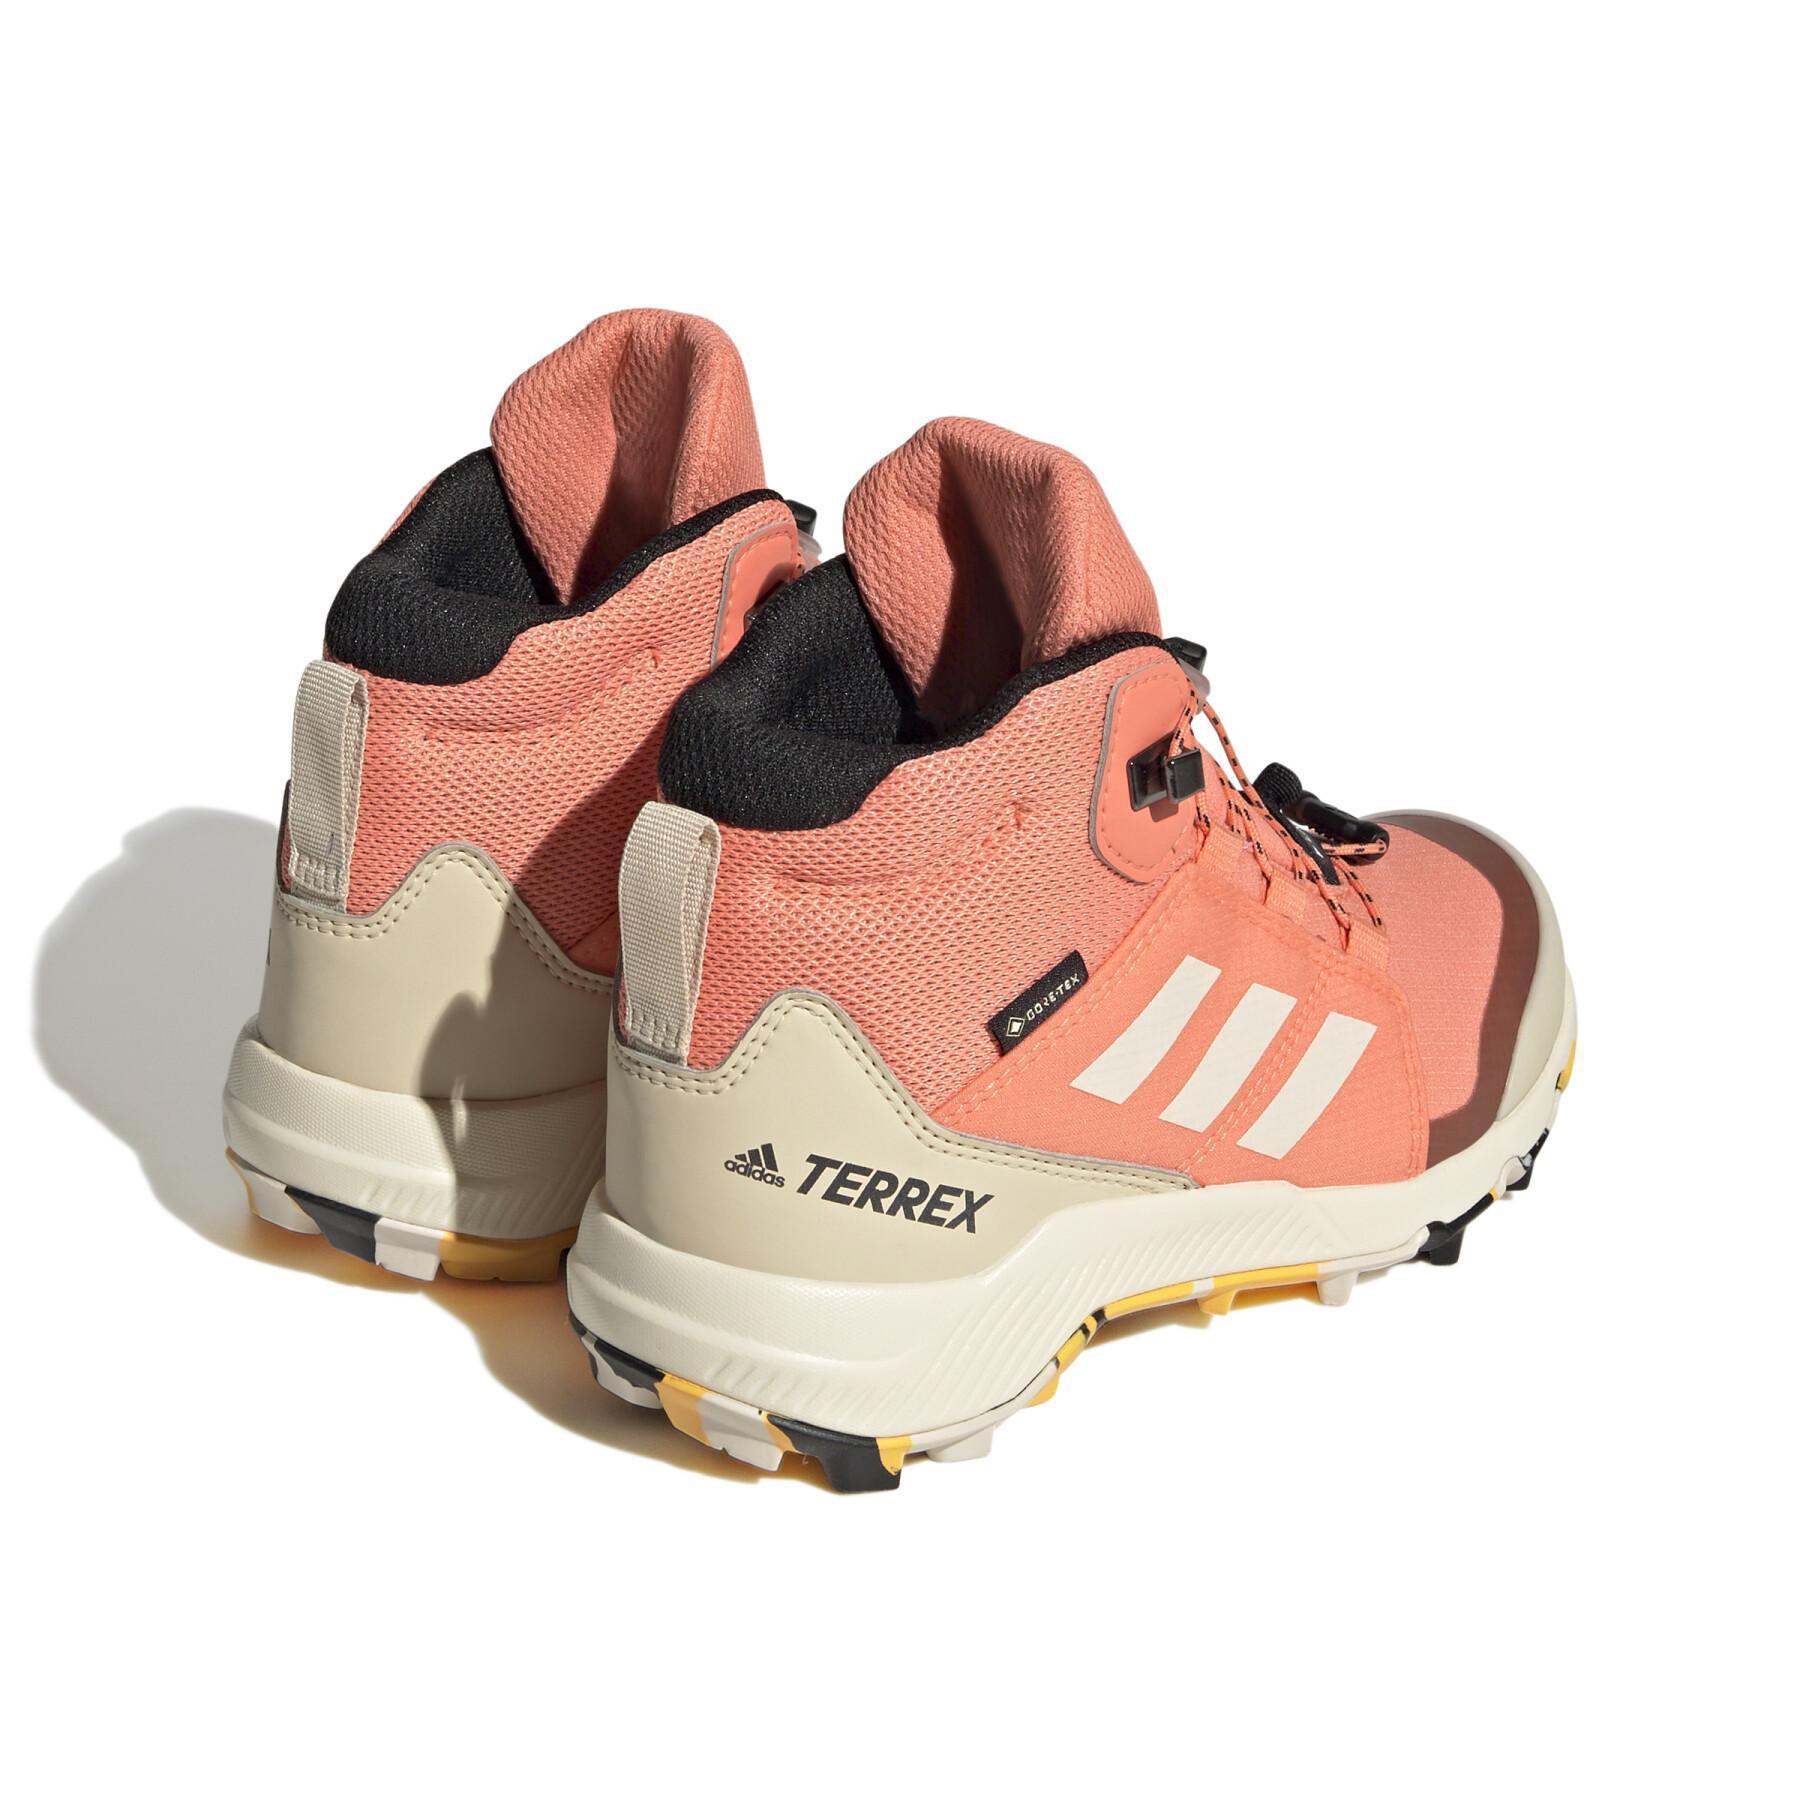 Chaussures de randonnée fille adidas Terrex Mid GORE-TEX